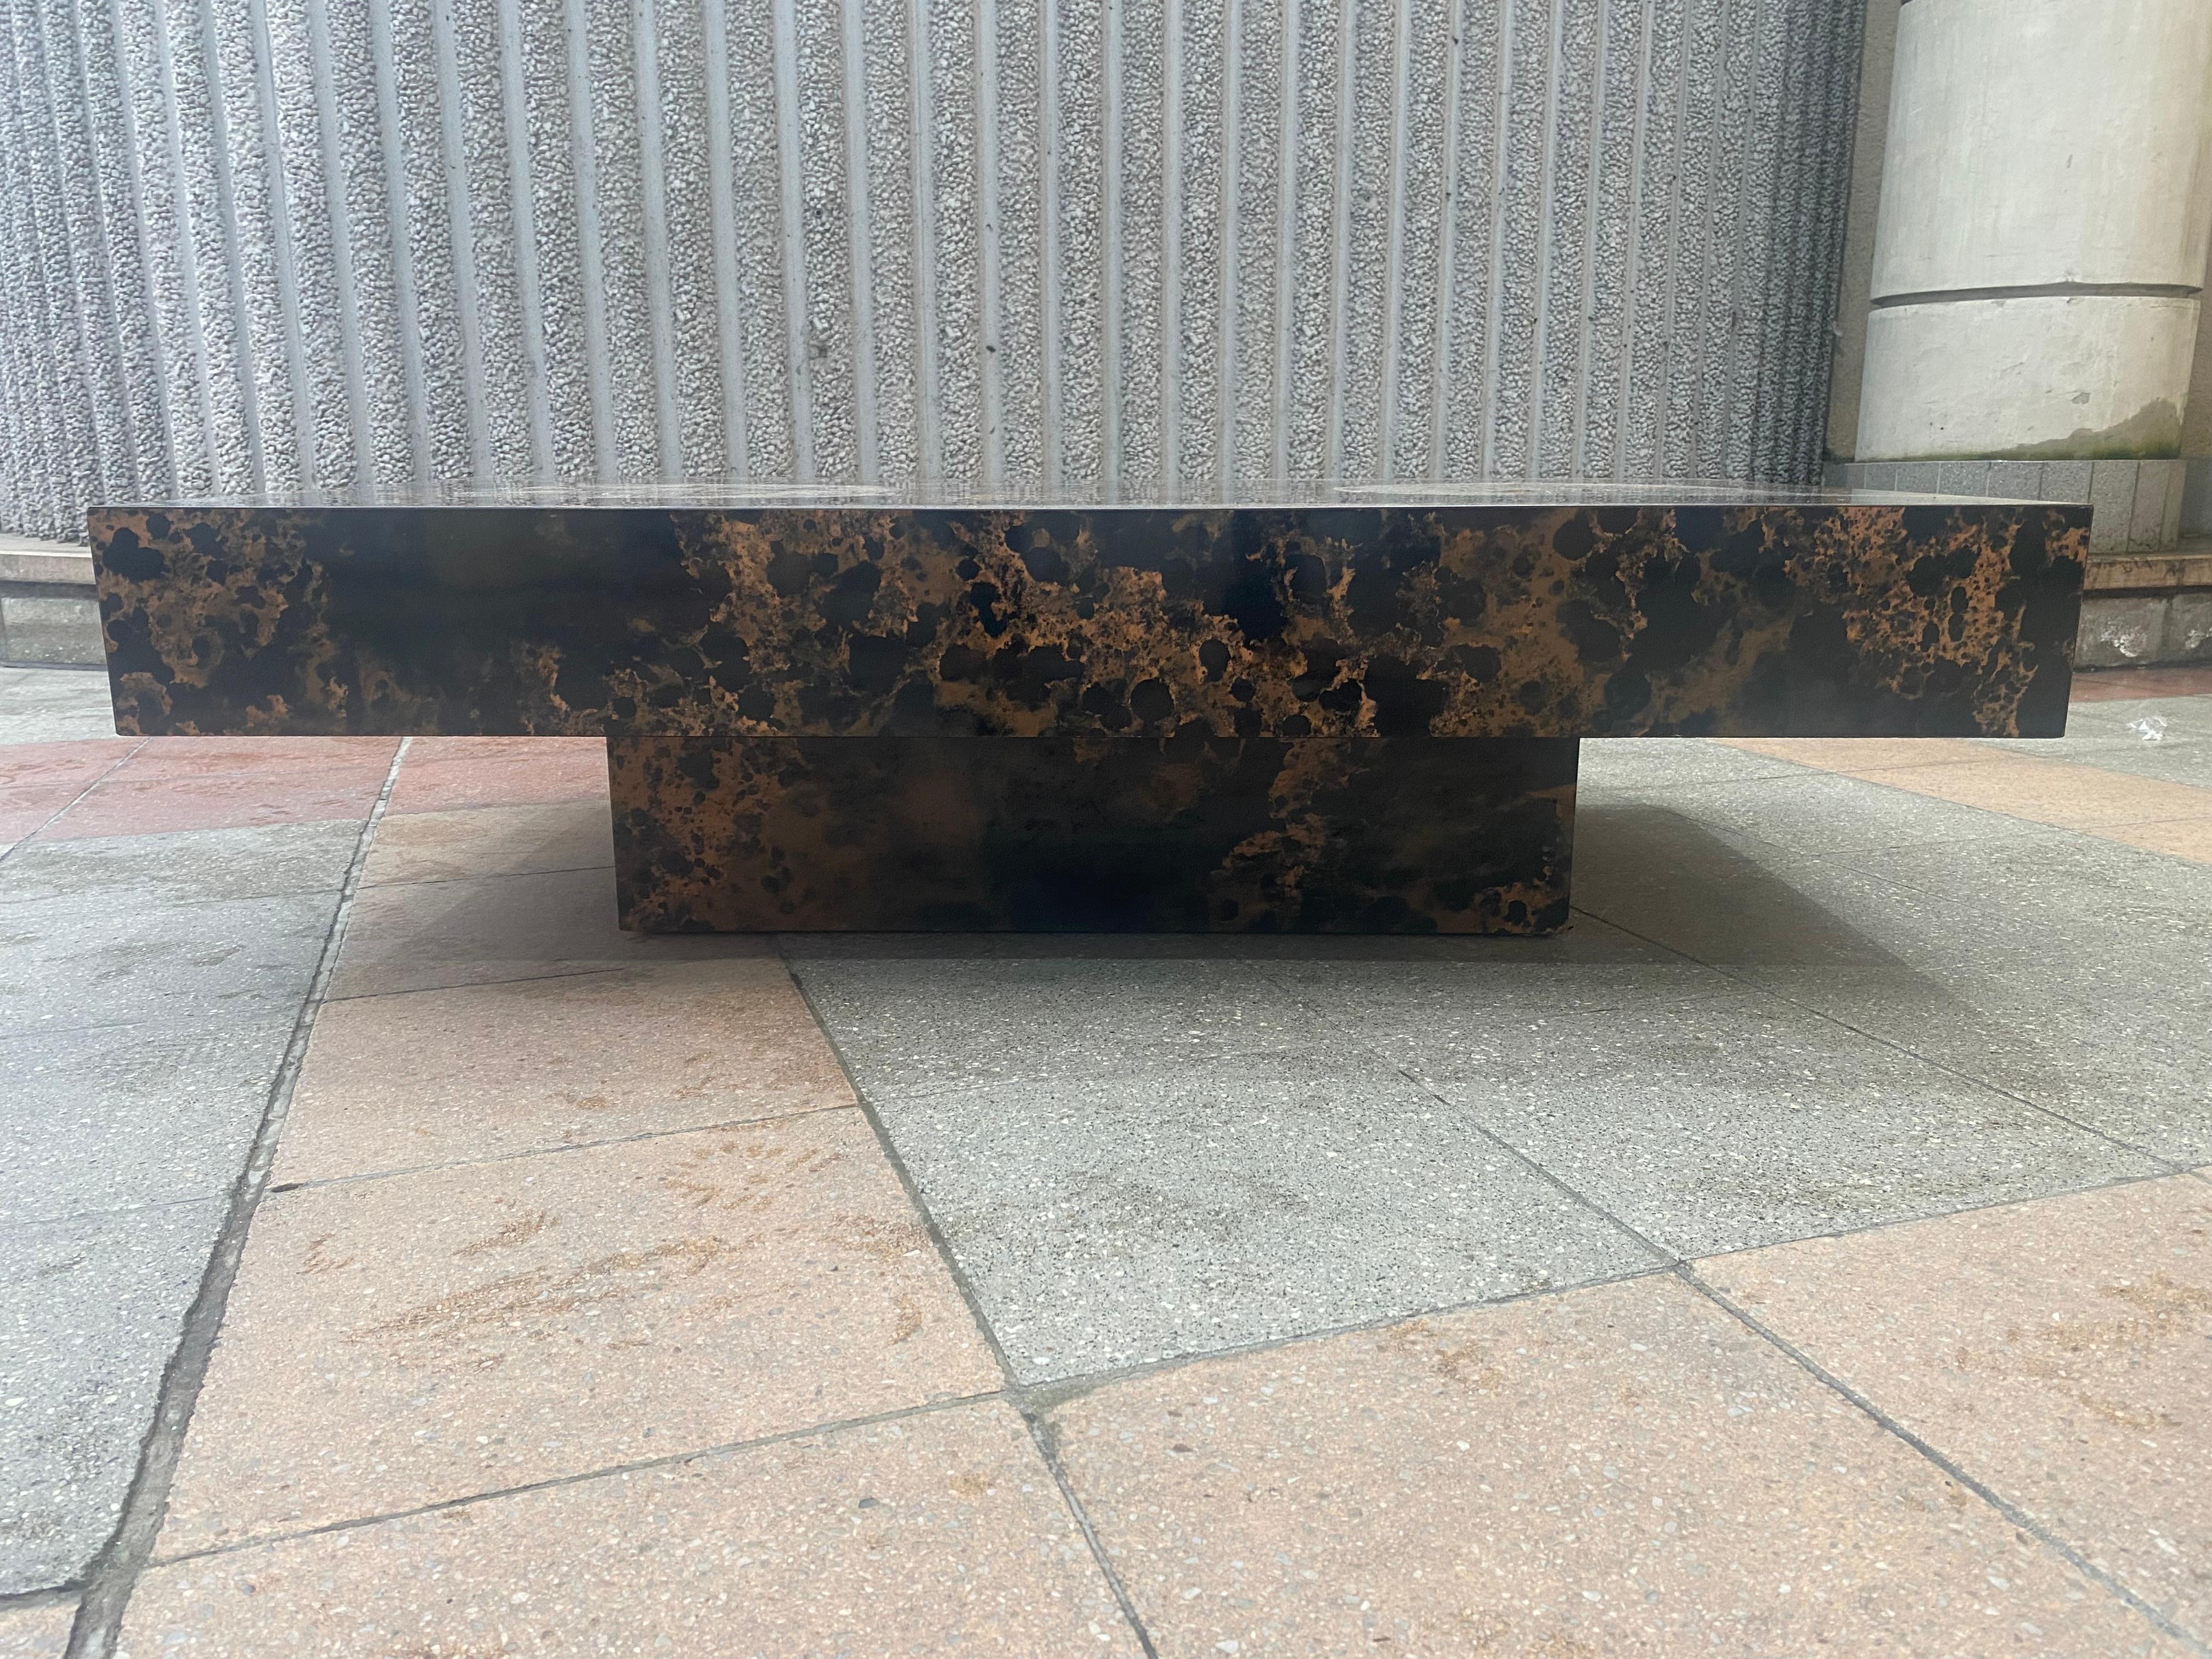 Guy lefevre
For roche bobois 
Solar flare coffee table 
Wood/ lacquered melamine 
Circa 1975
L 120 x W 70,5 x H 32,5
1800 euros